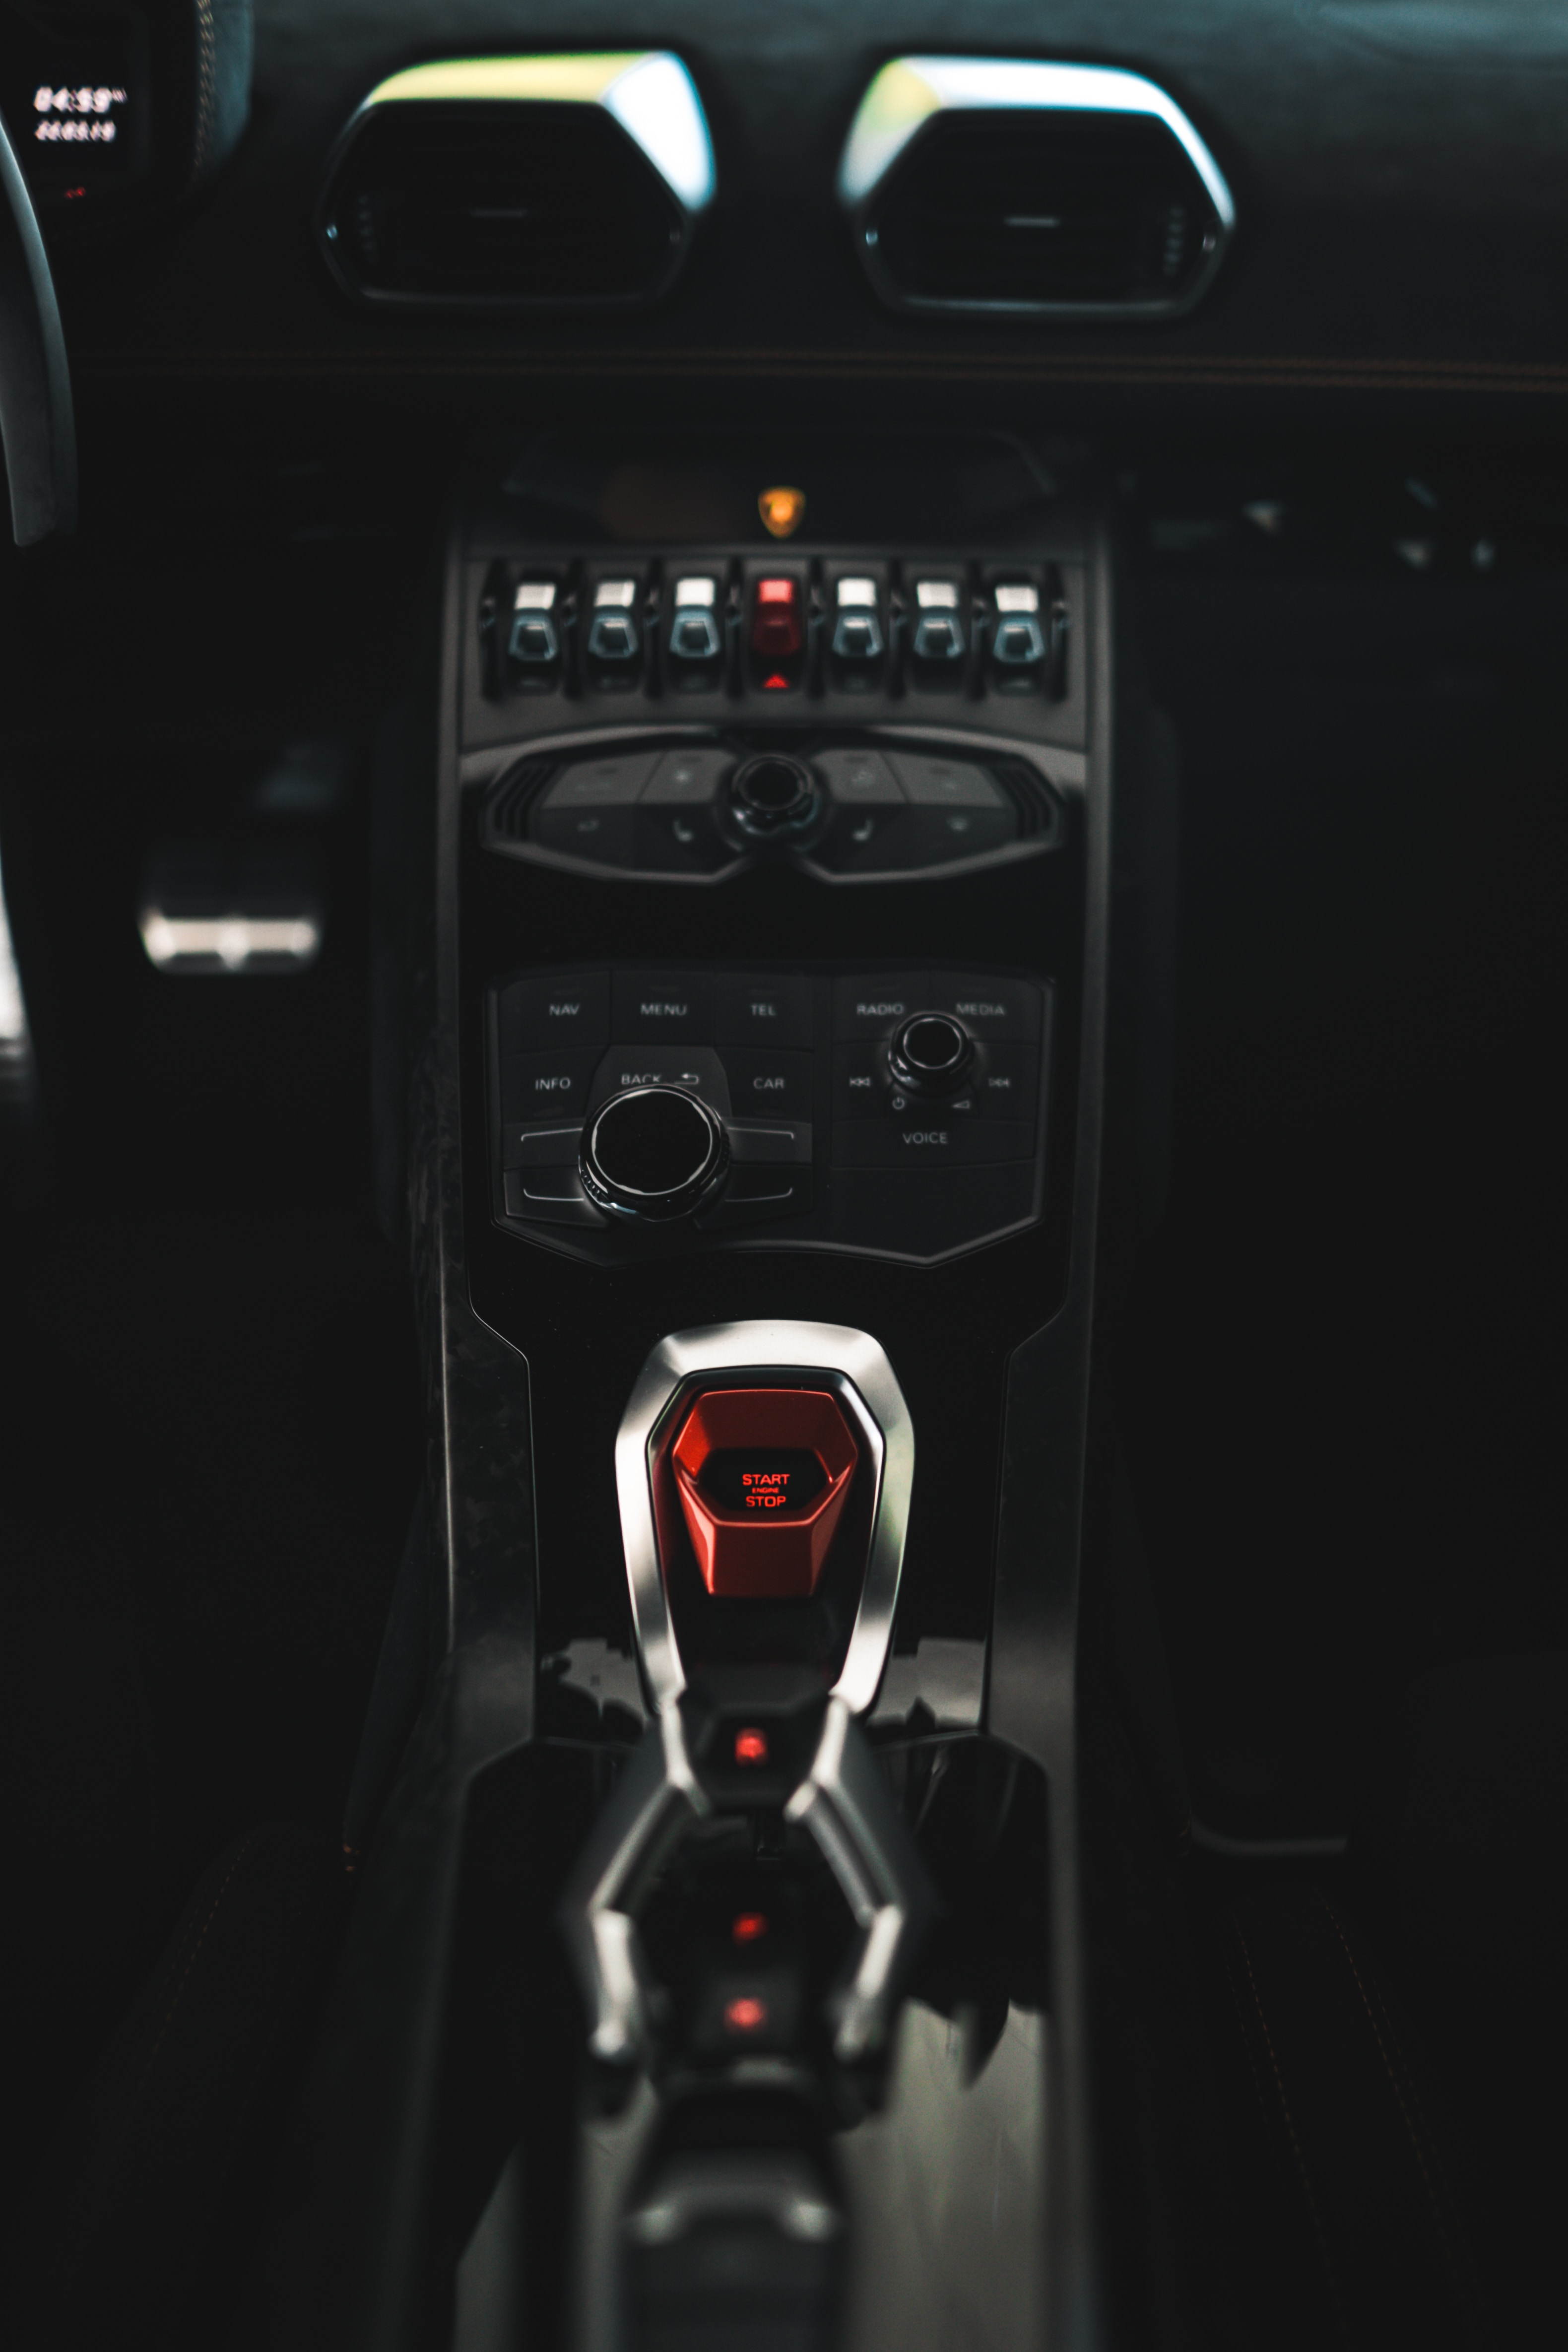 dark, buttons, salon, control panel, cars, car, machine